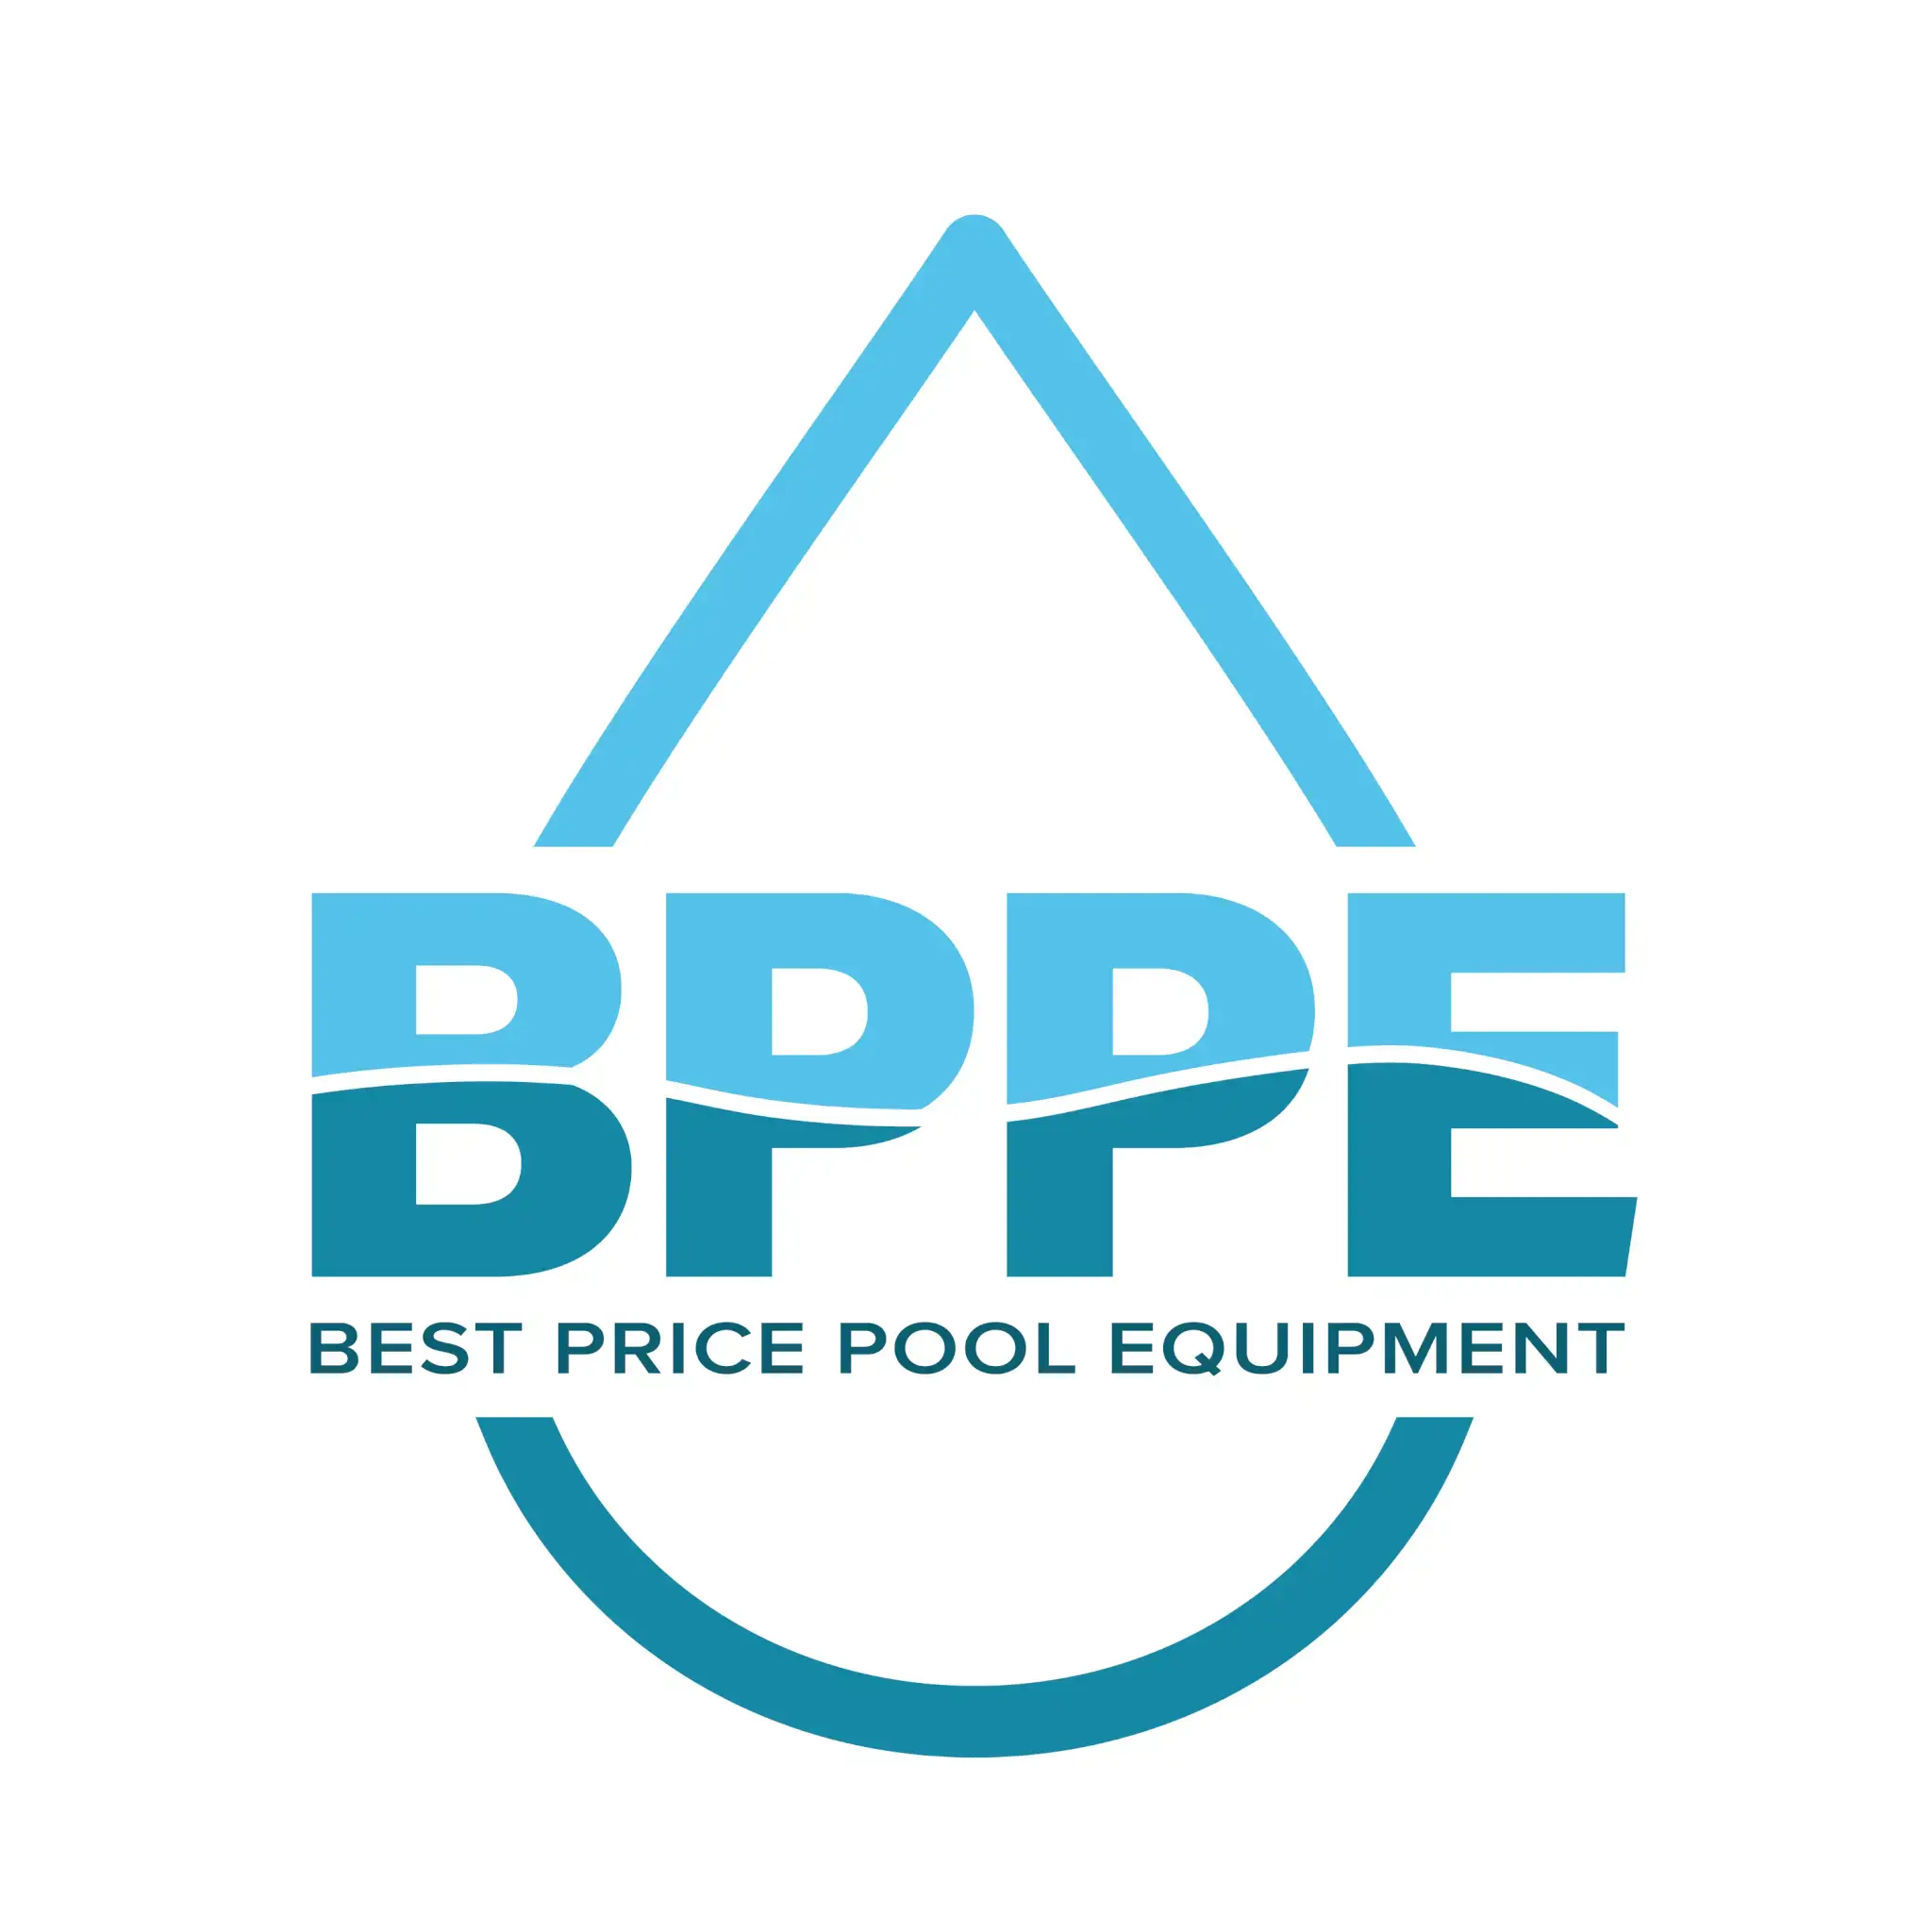 Best Price Pool Equipment Perth